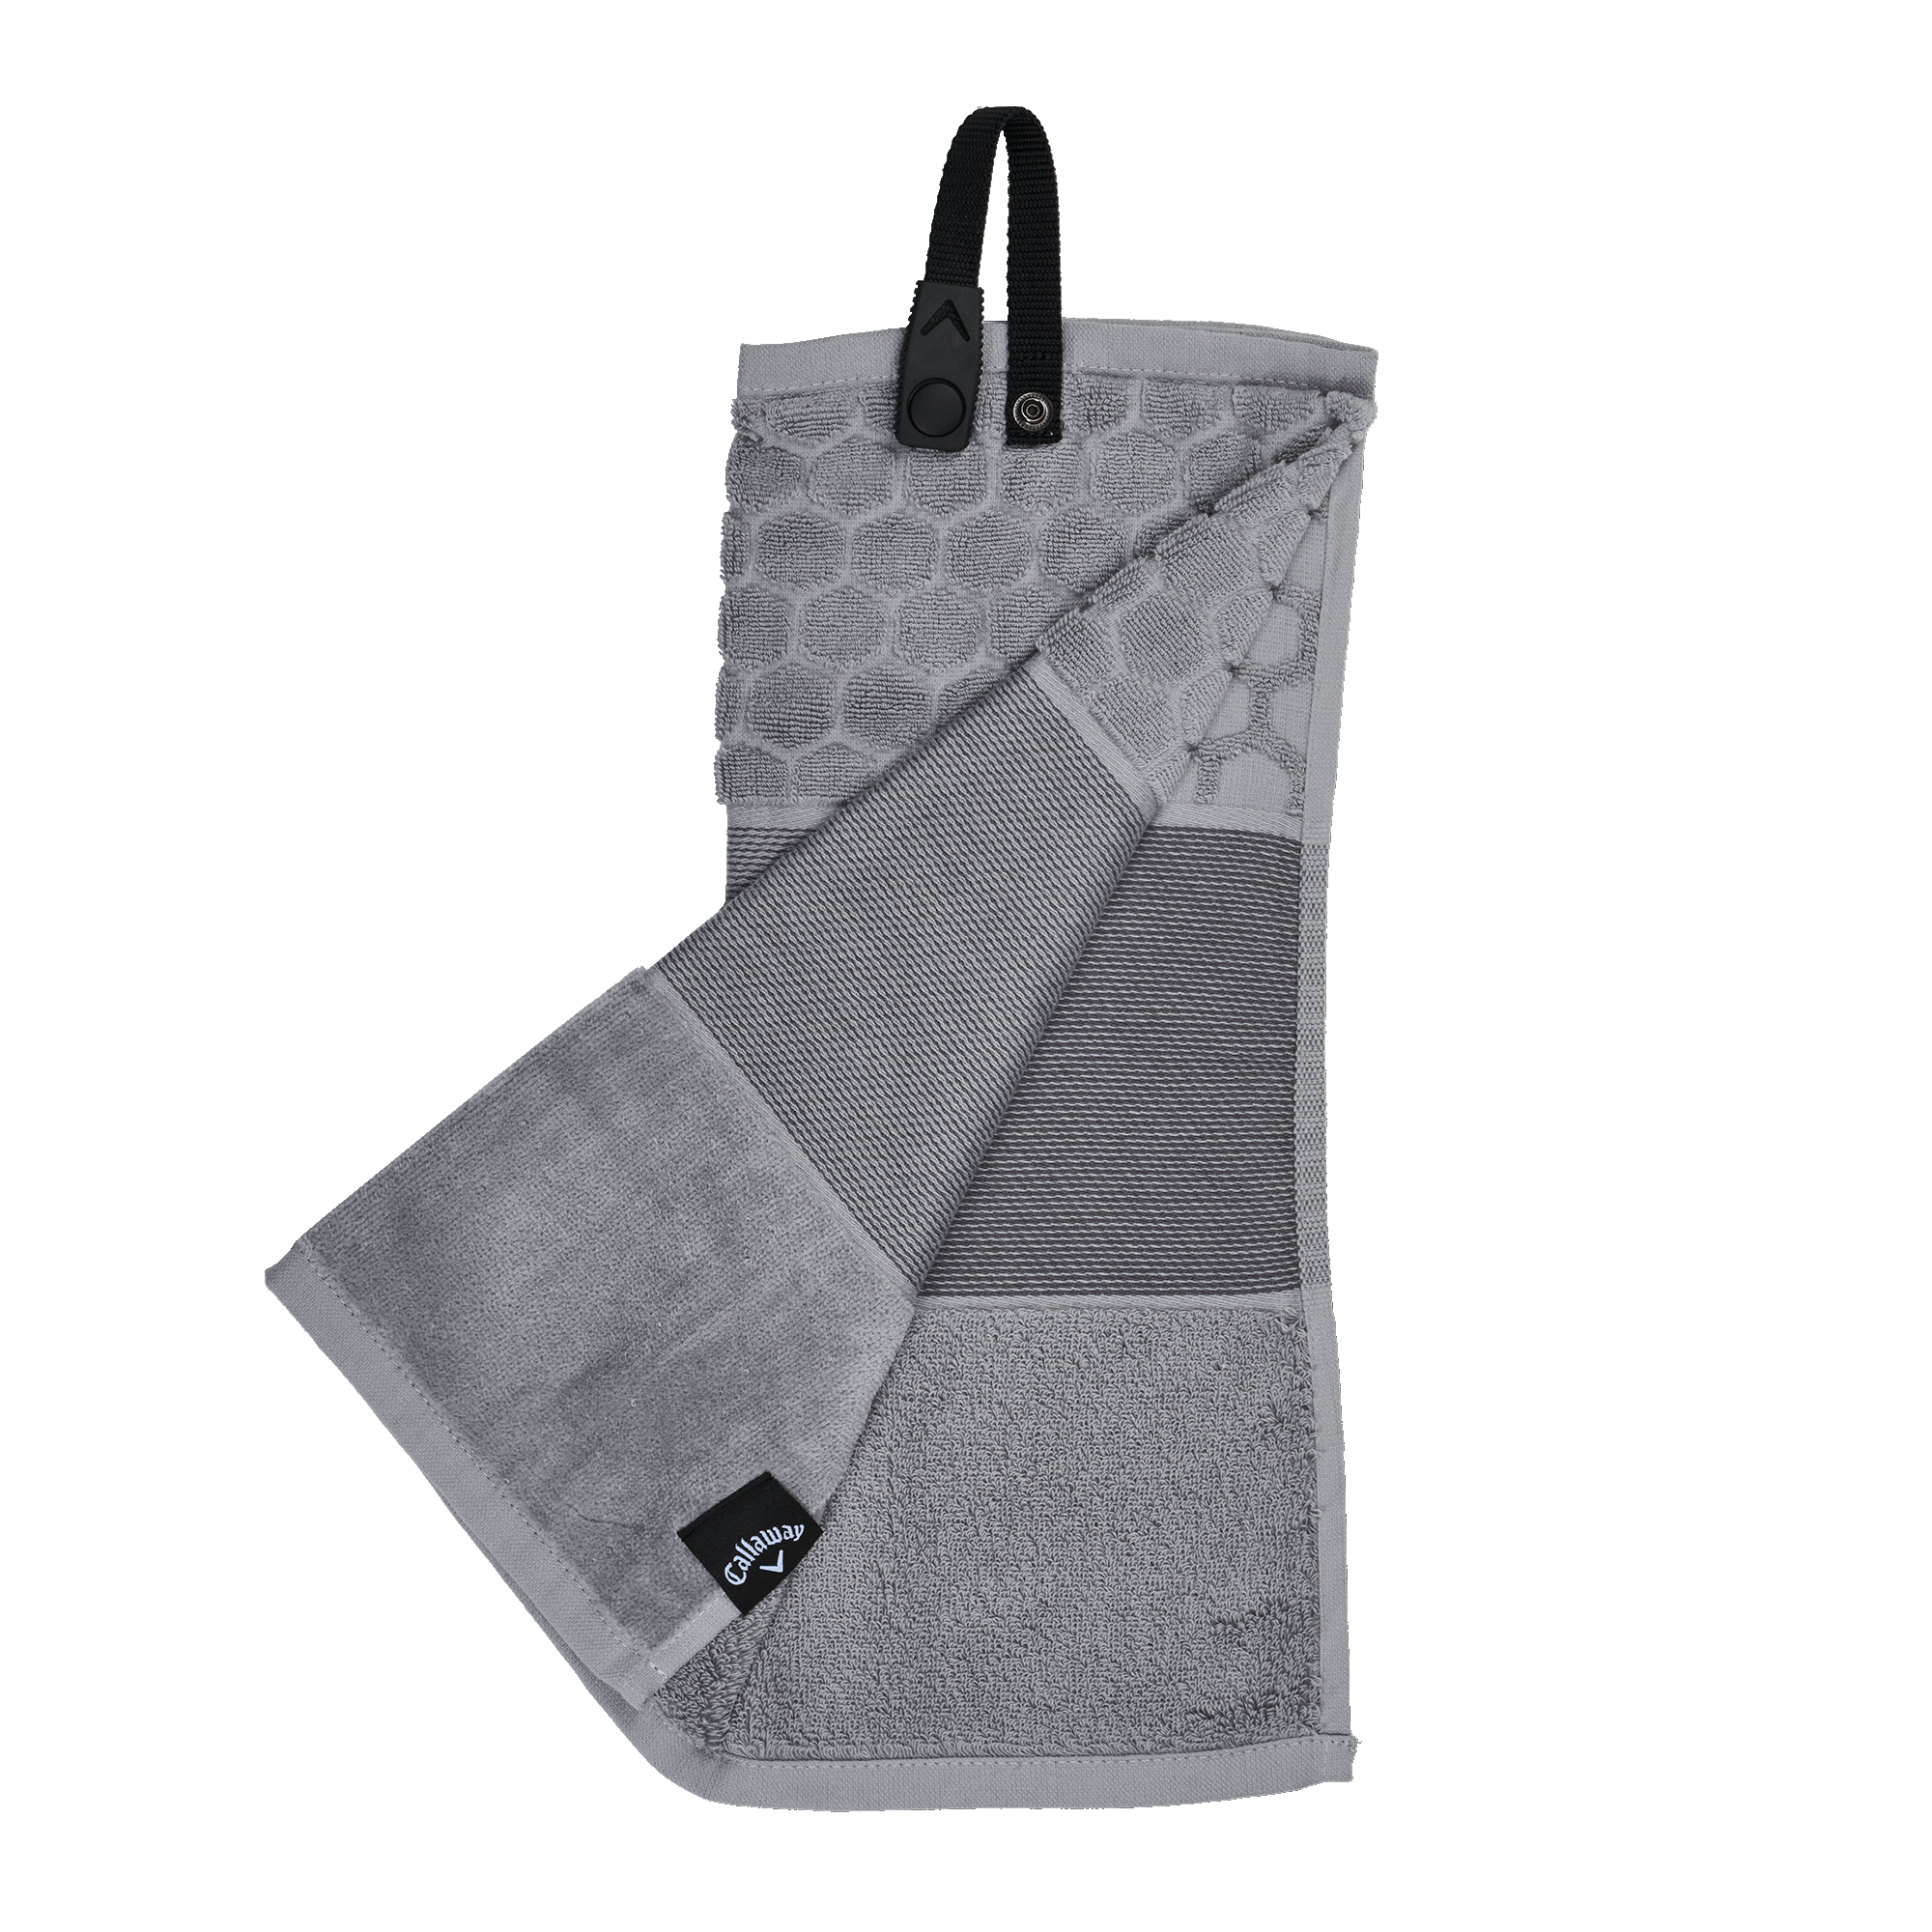 Callaway Tri-Fold Towel